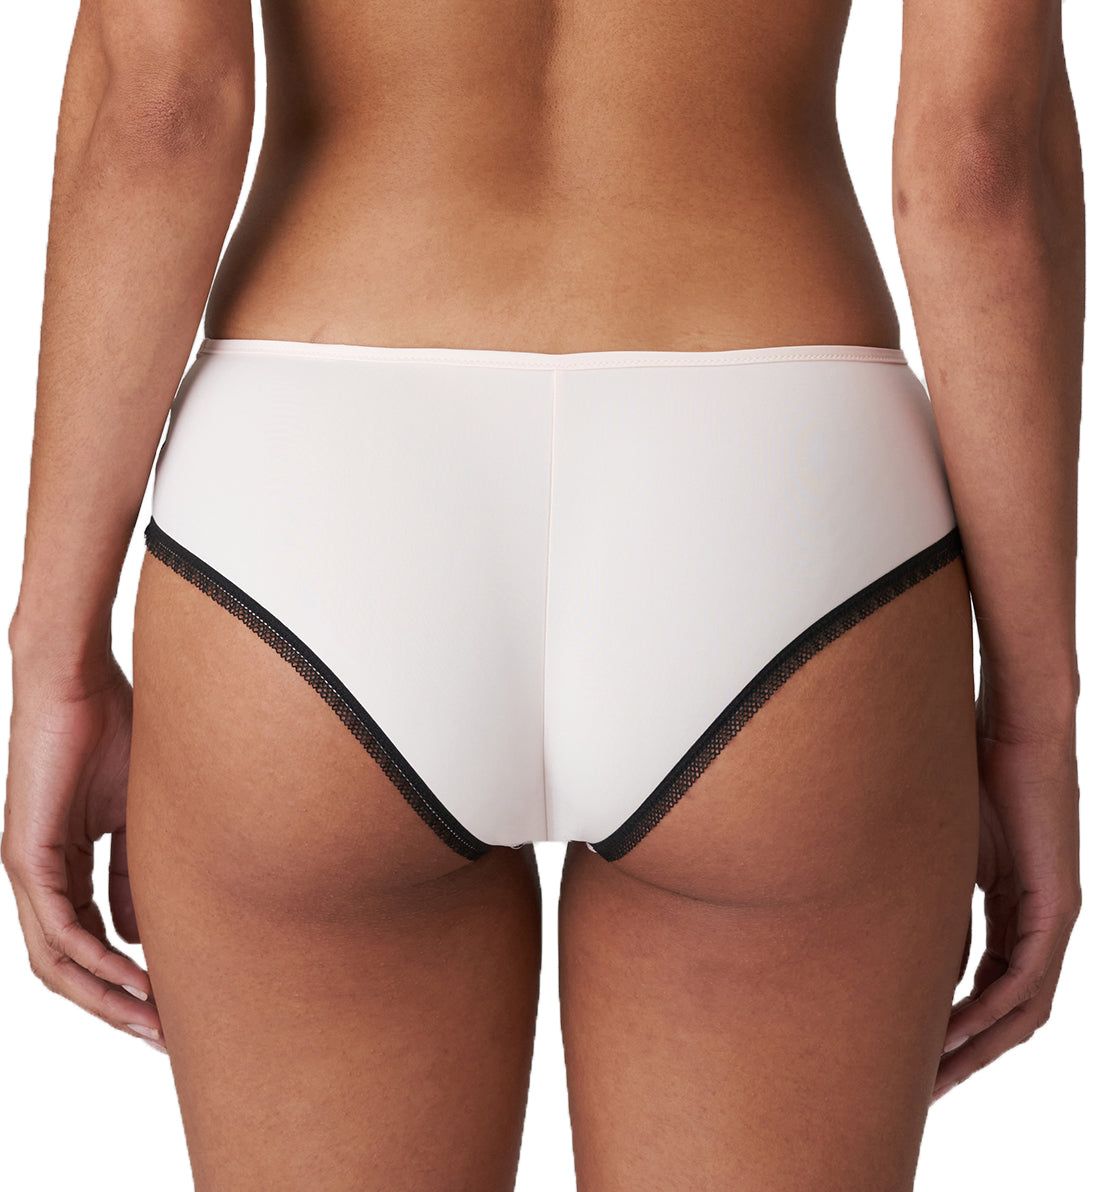 Marie Jo Noorah Matching Hotpants Panty (0502622),XS,Black/Blush - Black/Blush,XS